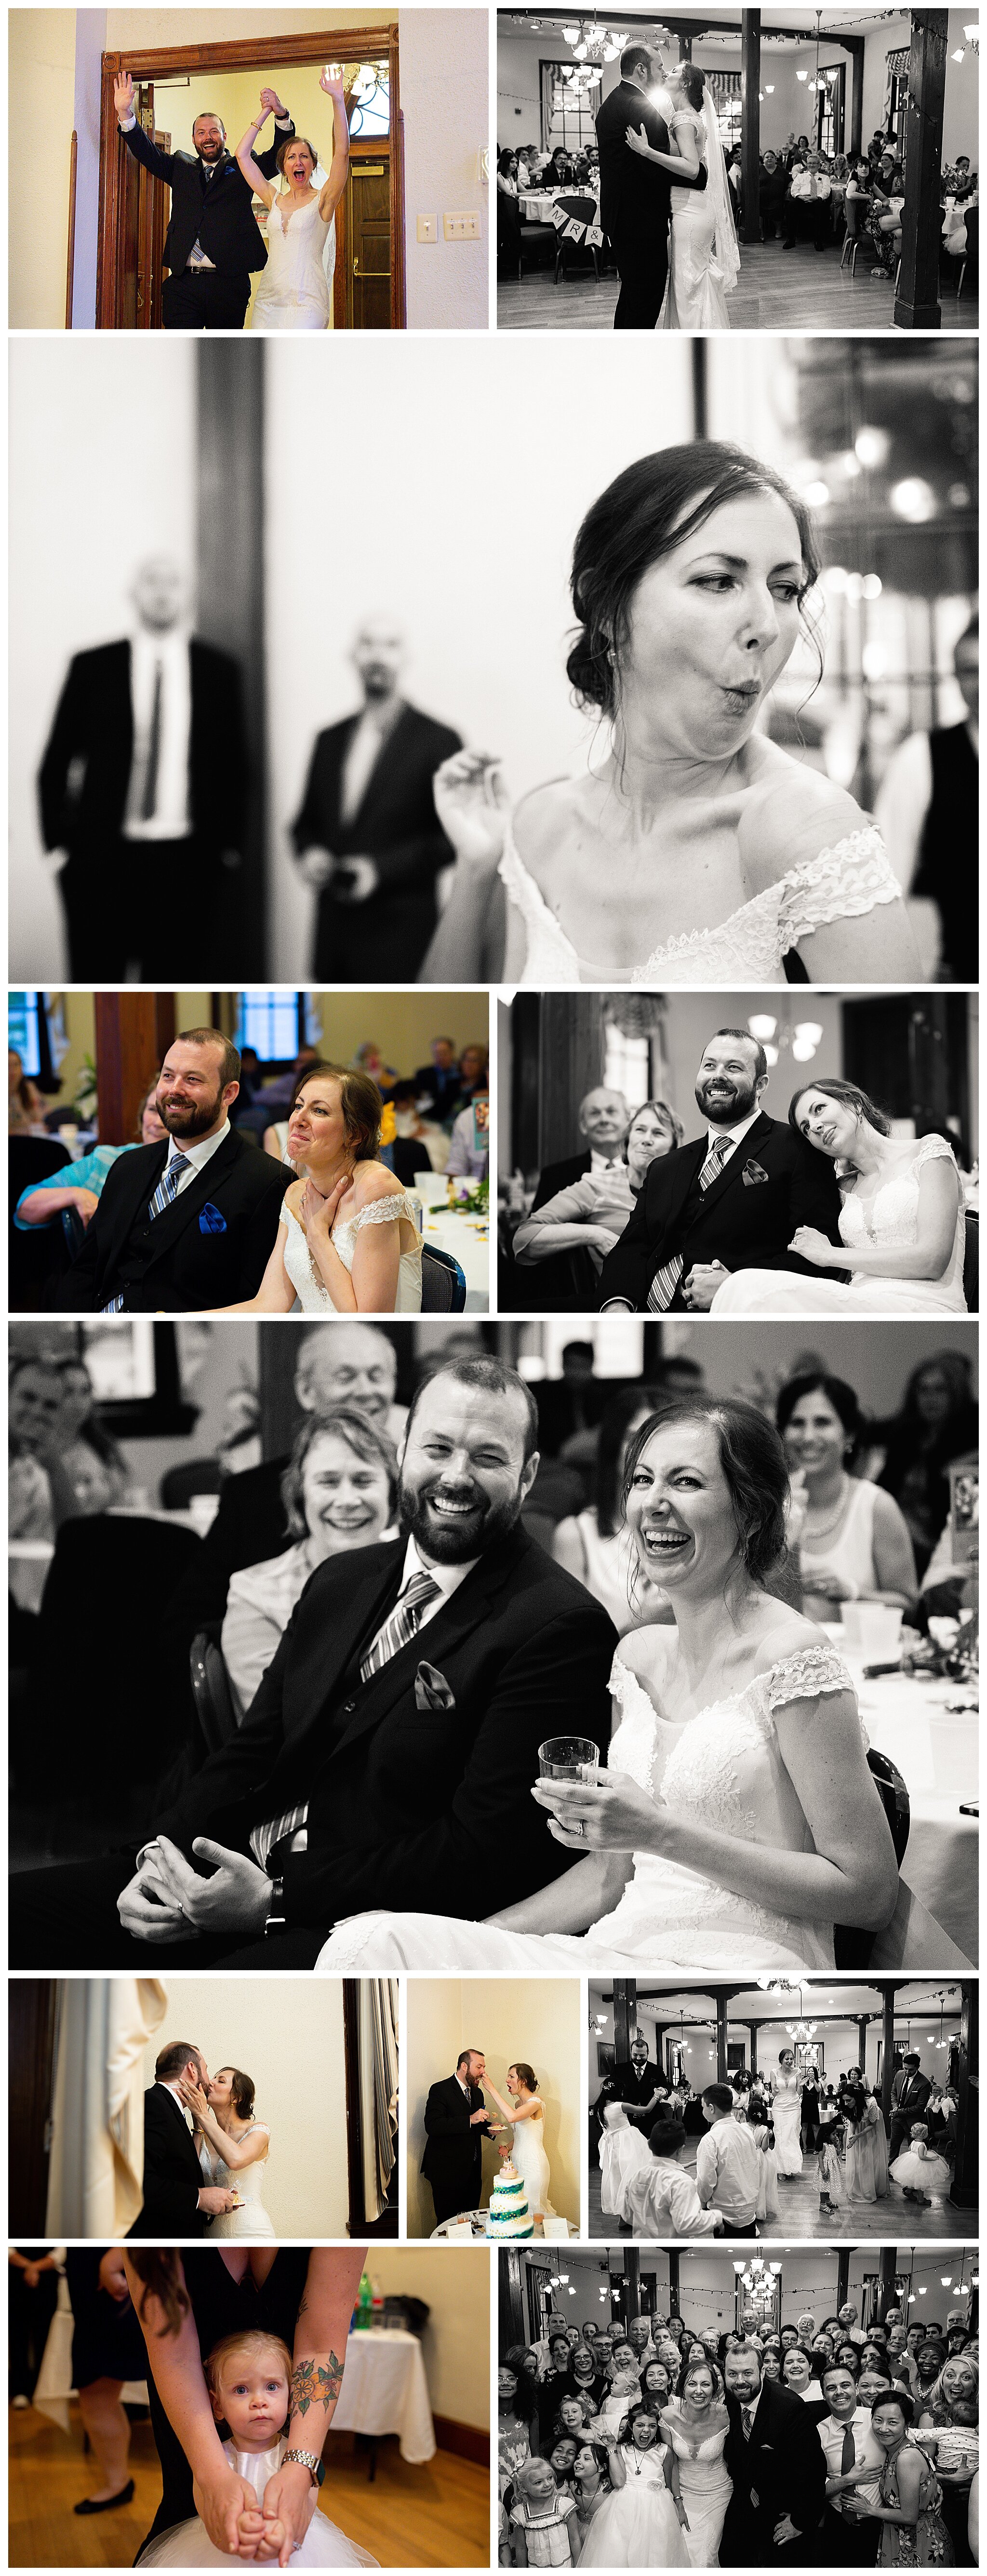 family-at-wedding-reception-having-fun-kelly-loss.jpg